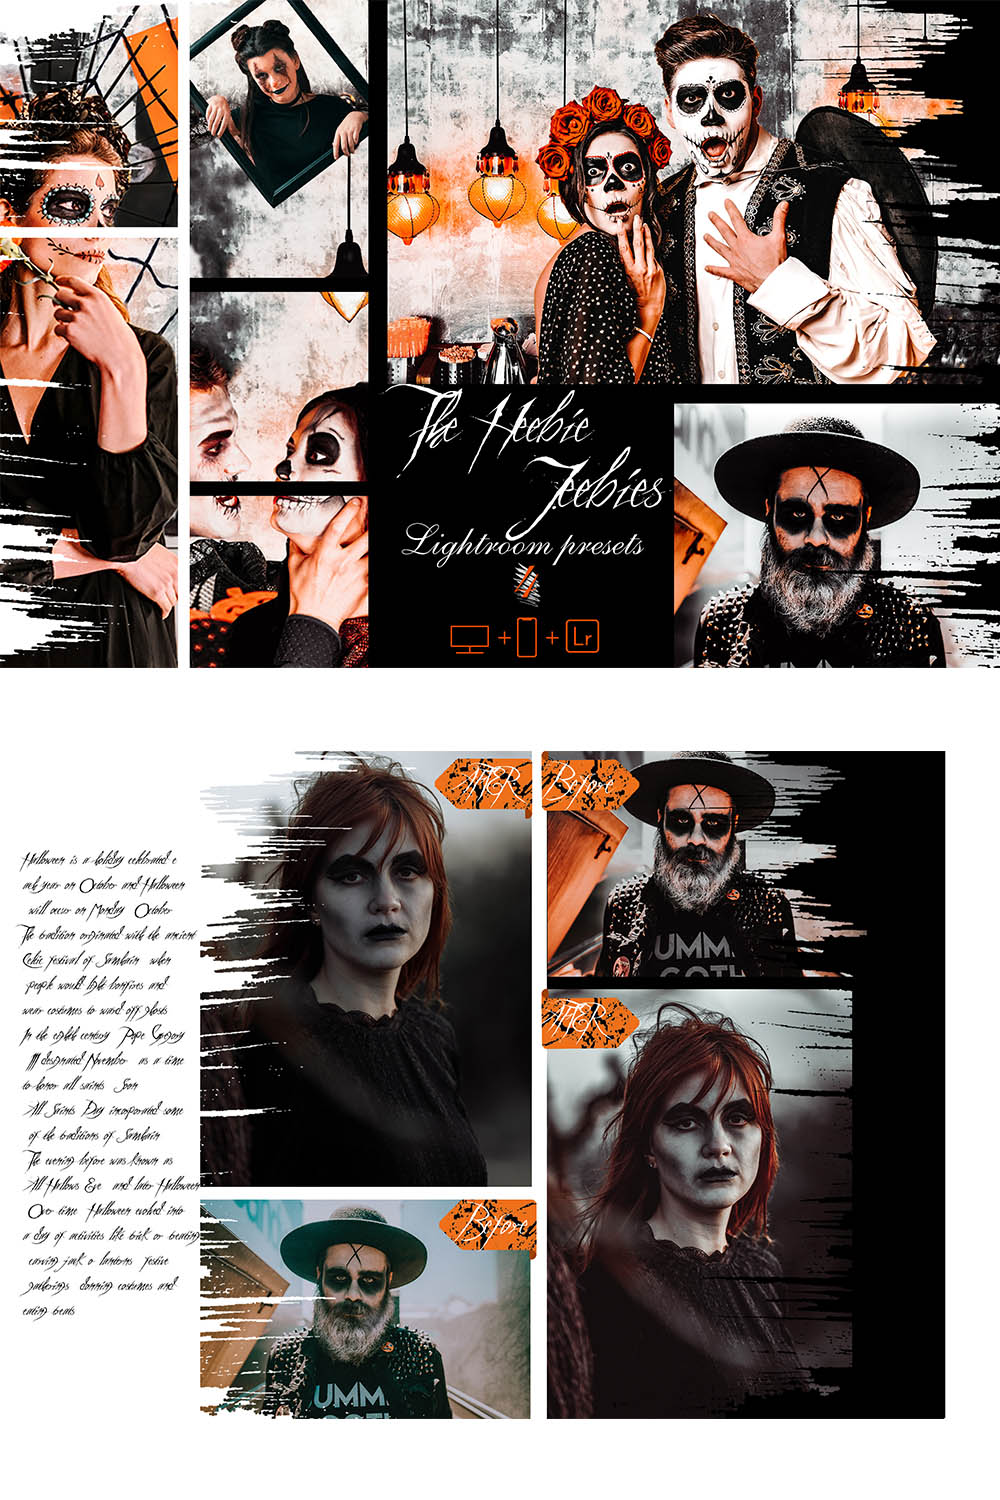 12 The Heebie-Jeebies Lightroom Presets, Halloween Mobile Preset, Horror Orange Desktop, Lifestyle Portrait Theme Instagram LR Filter DNG pinterest preview image.